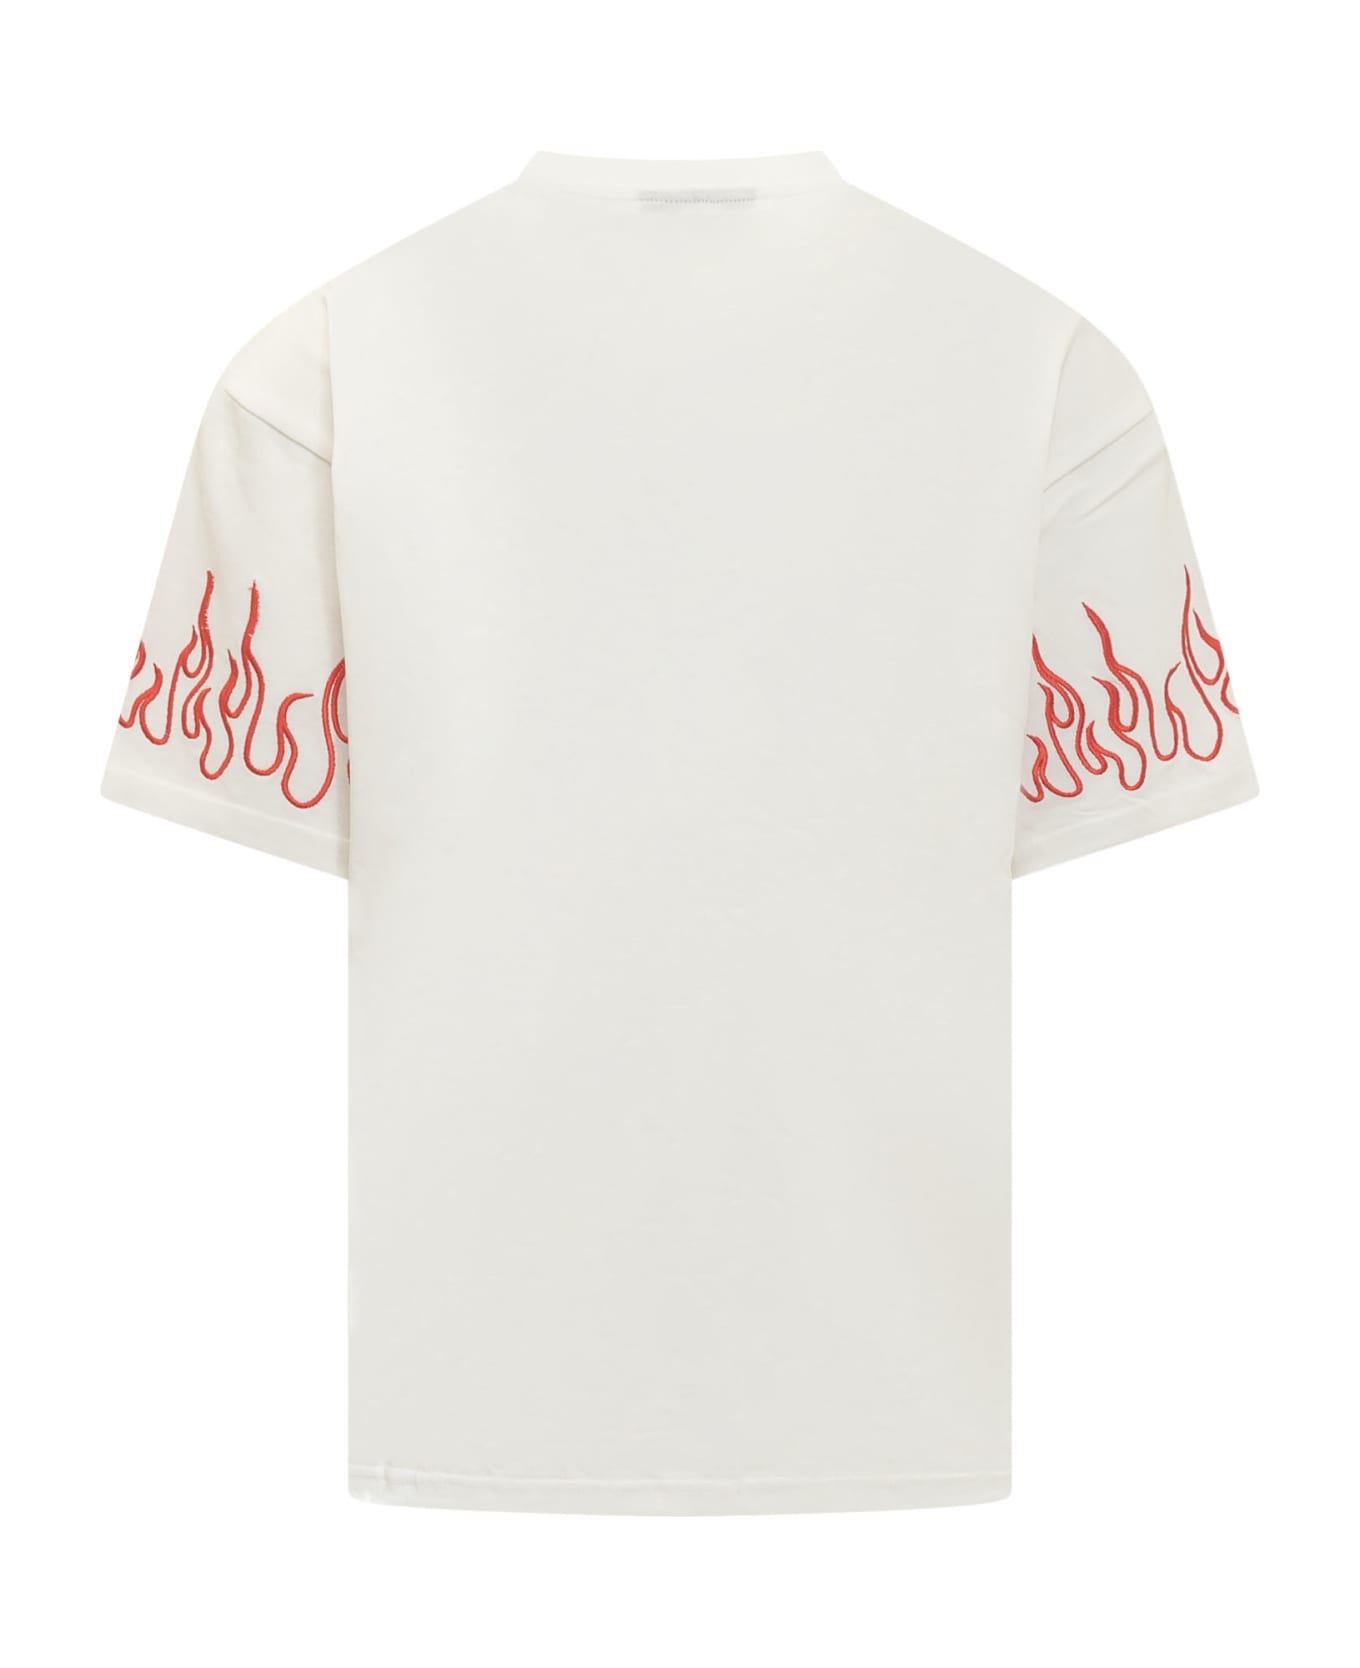 Vision of Super Flames T-shirt - White シャツ